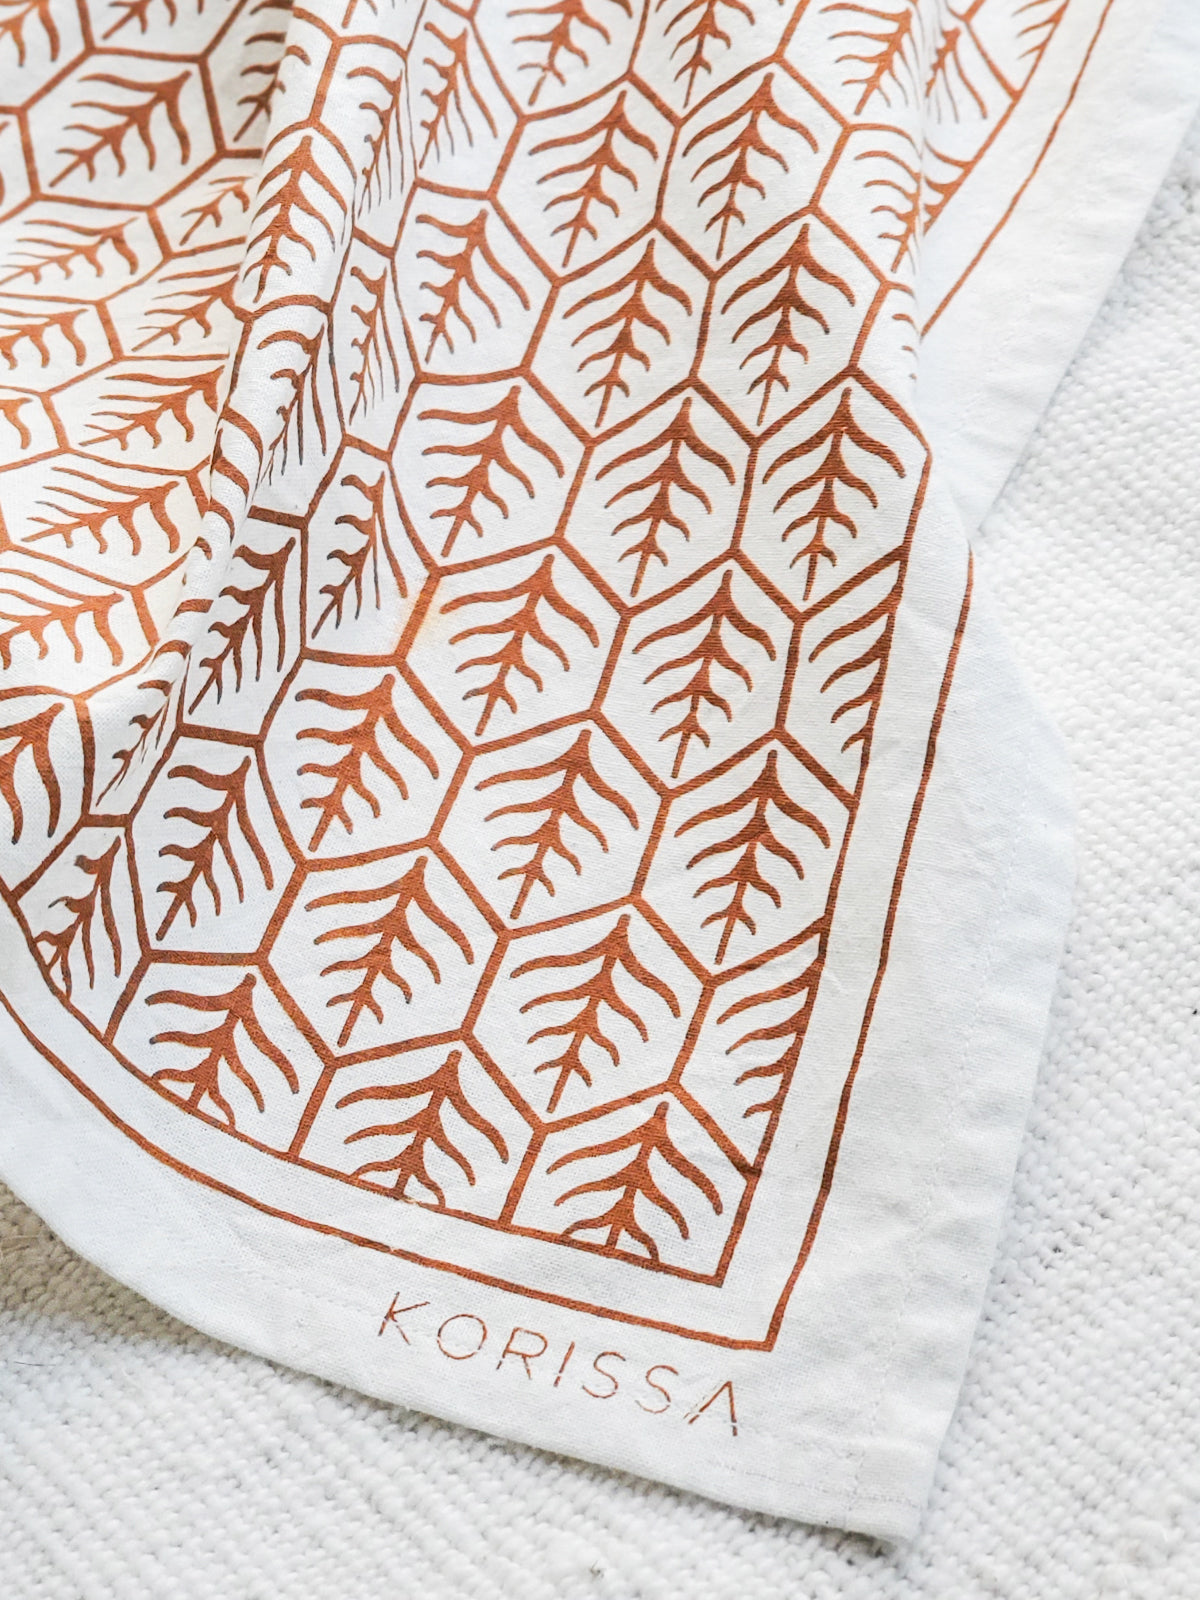 Printed tea towels with closeup of Korissa label 